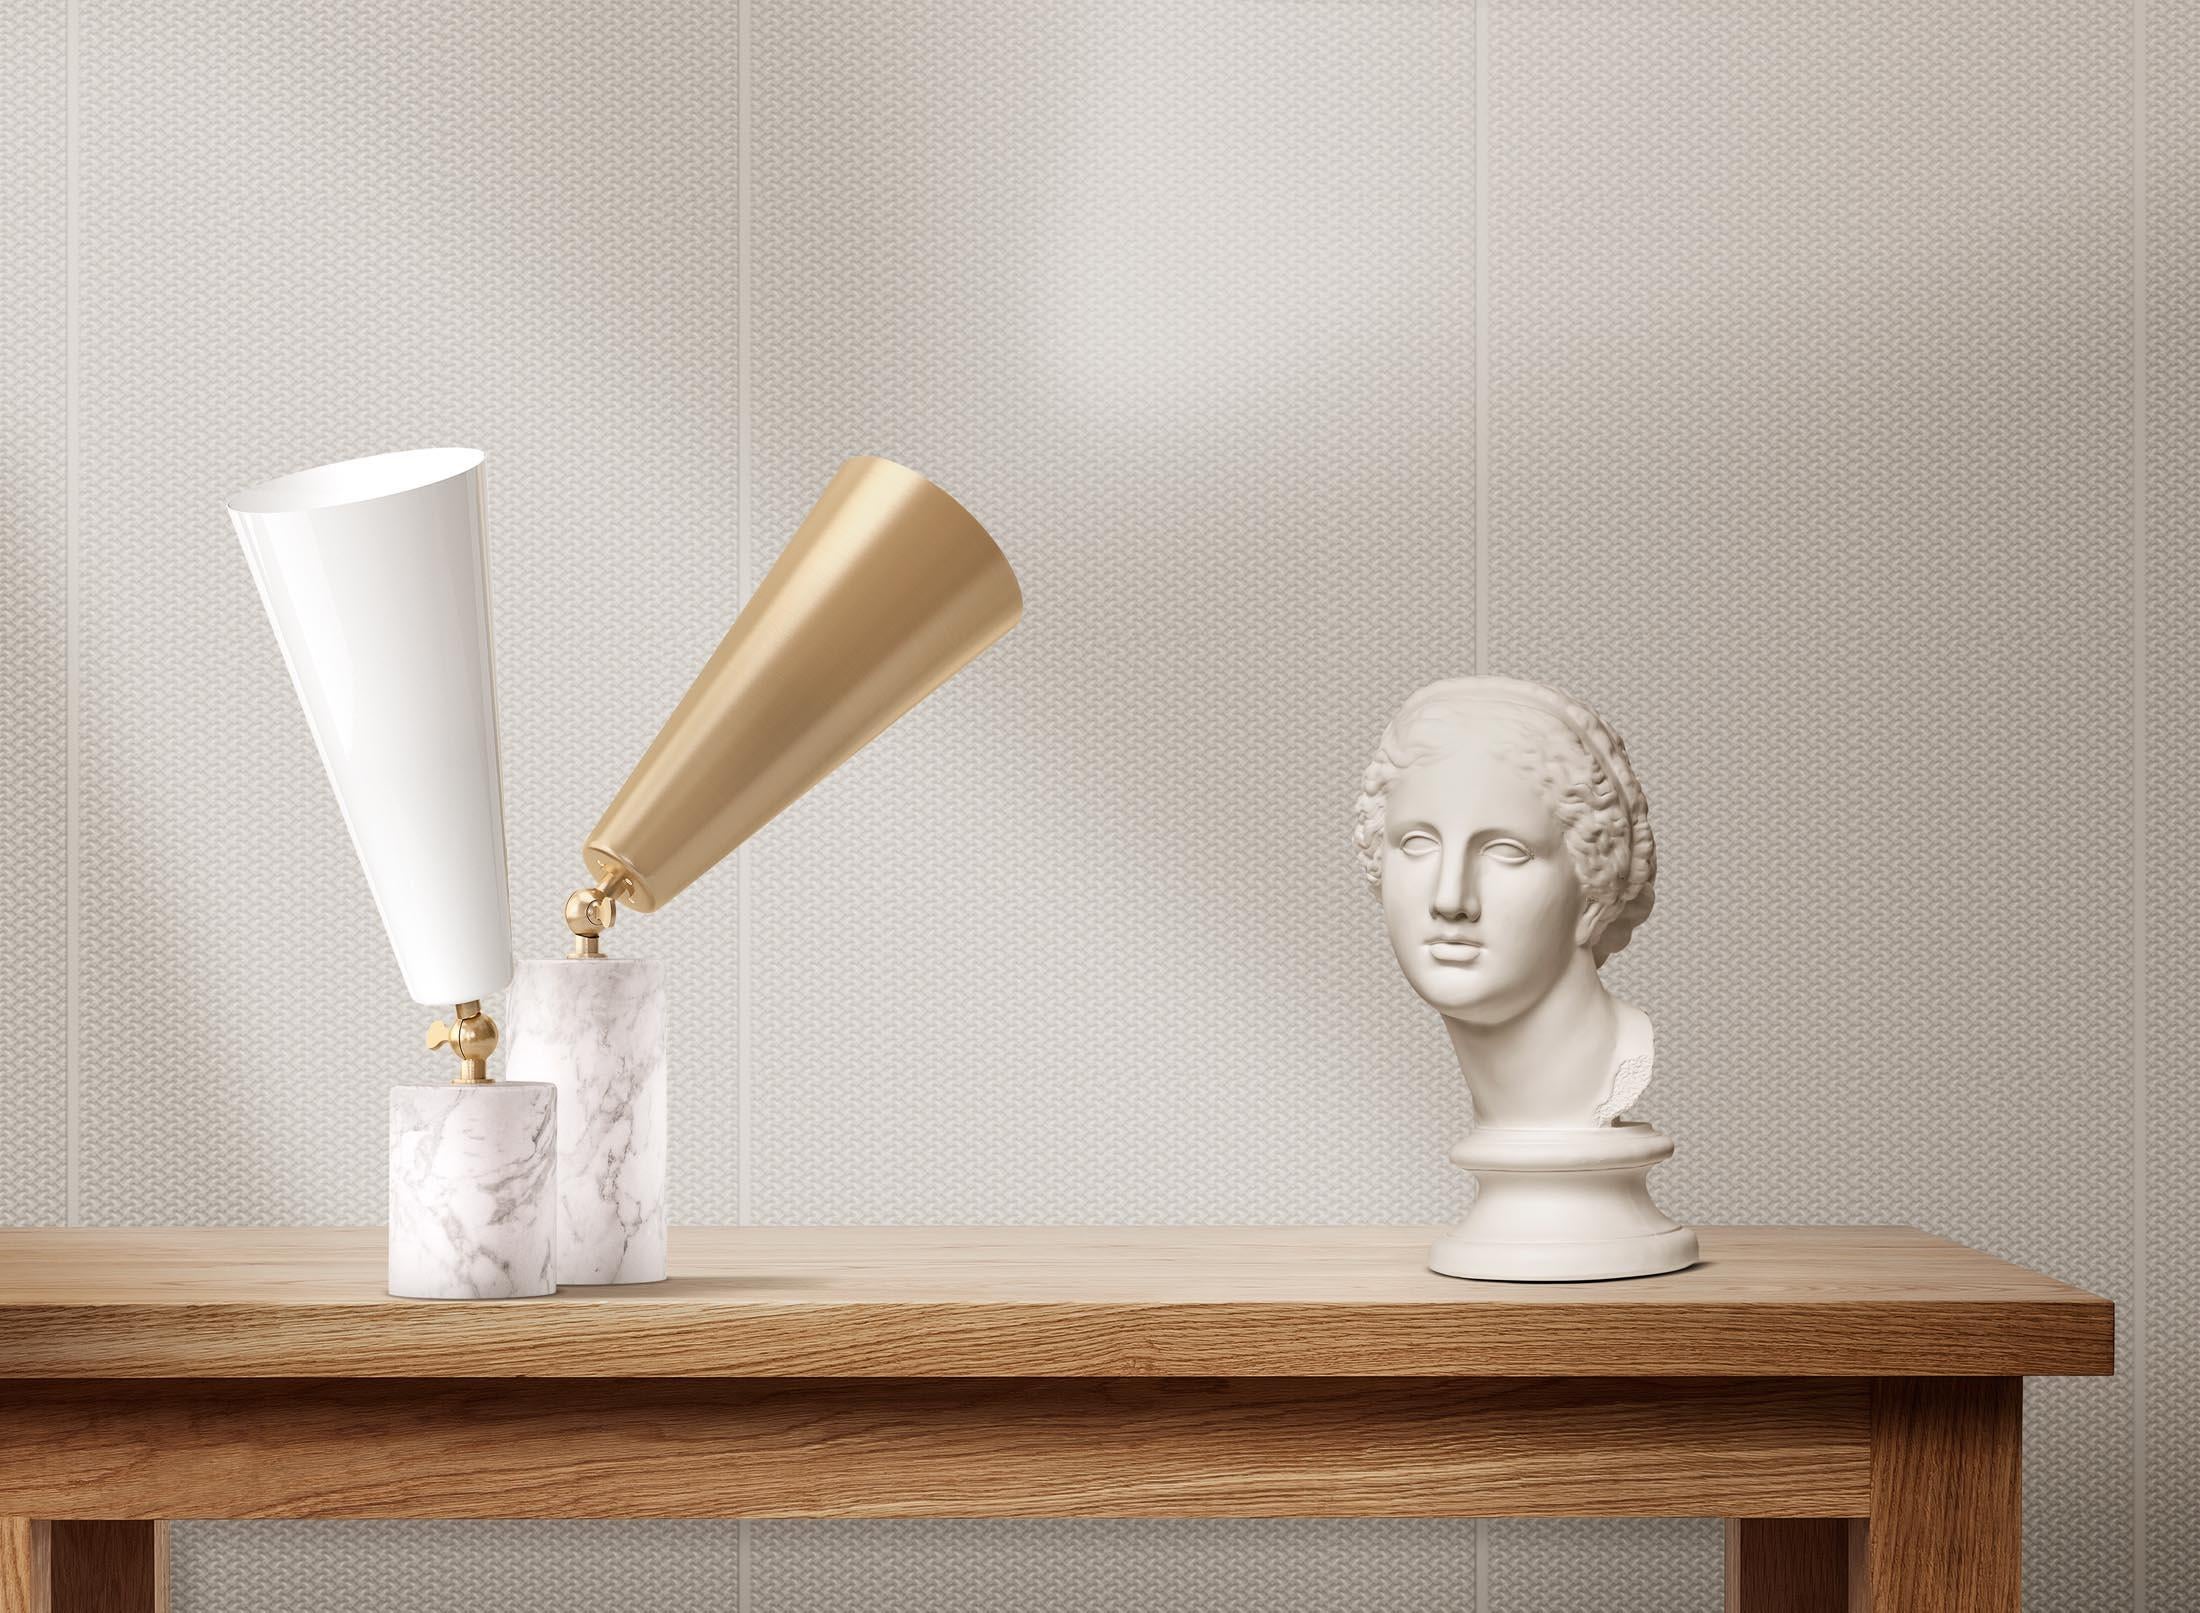 Tato Italia 'Vox' Table Lamp in White Carrara Marble, Chrome, and Glossy Black For Sale 5